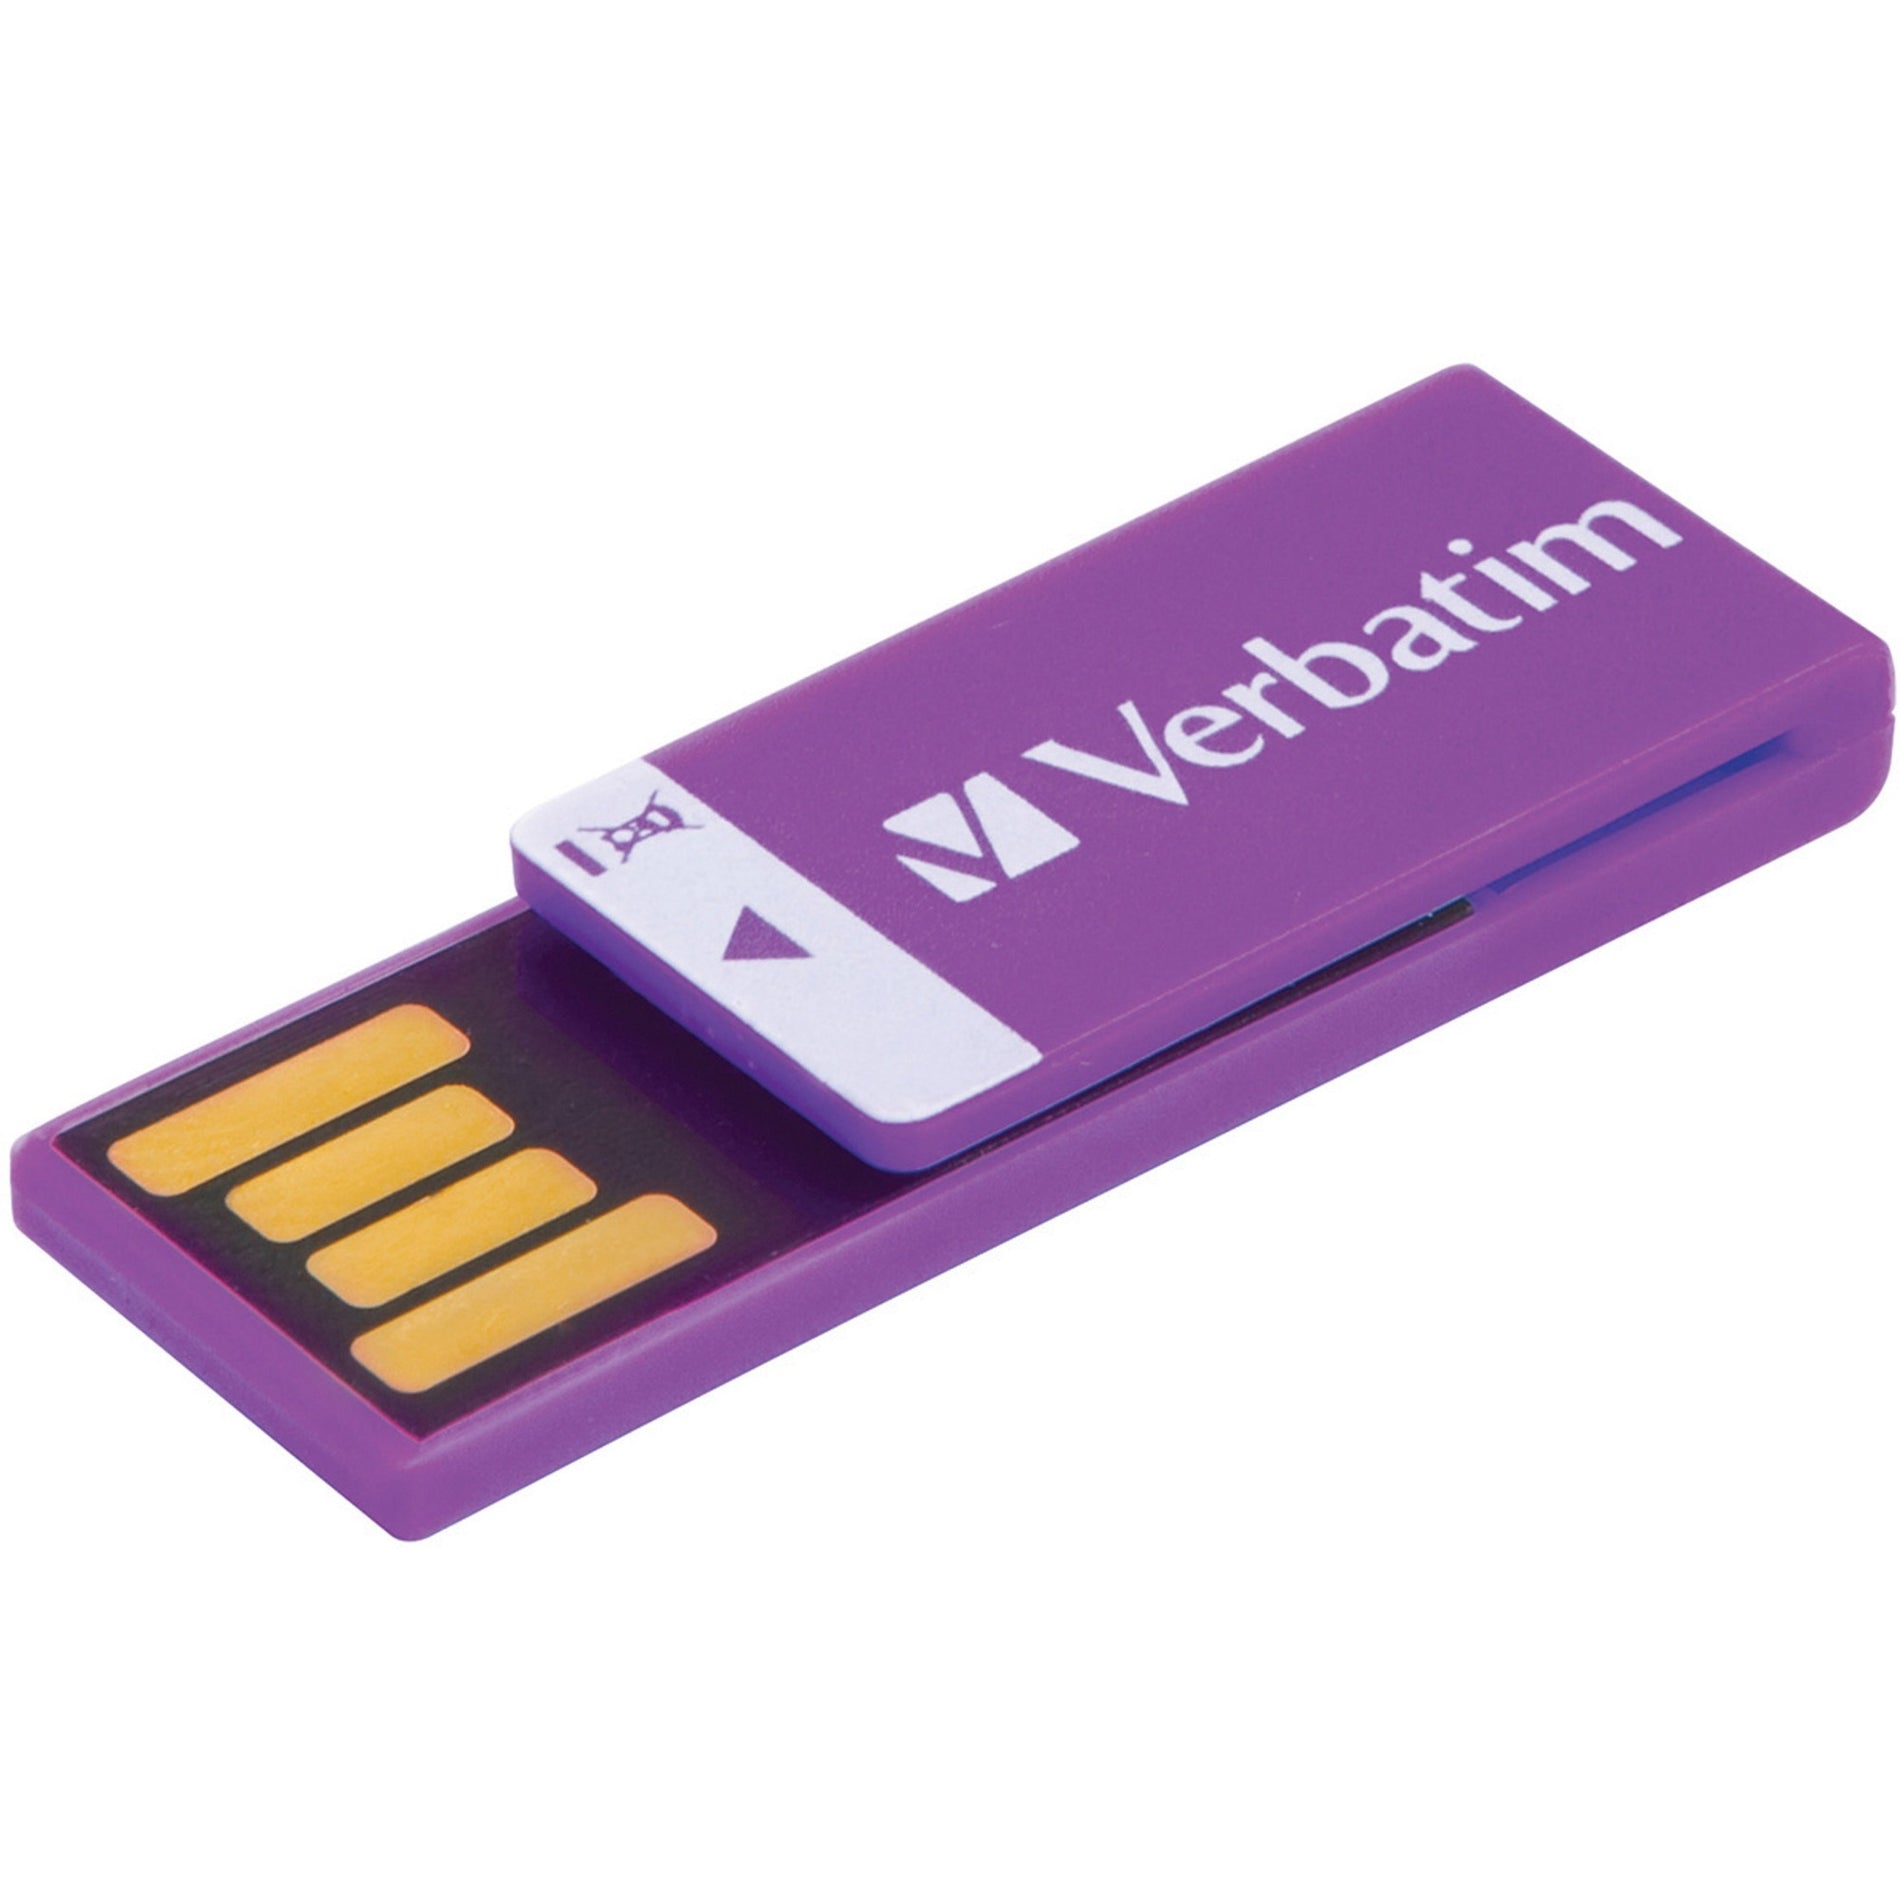 Microban 43952 Clip-it USB Flash Drive, Violet, 16GB - Lifetime Warranty